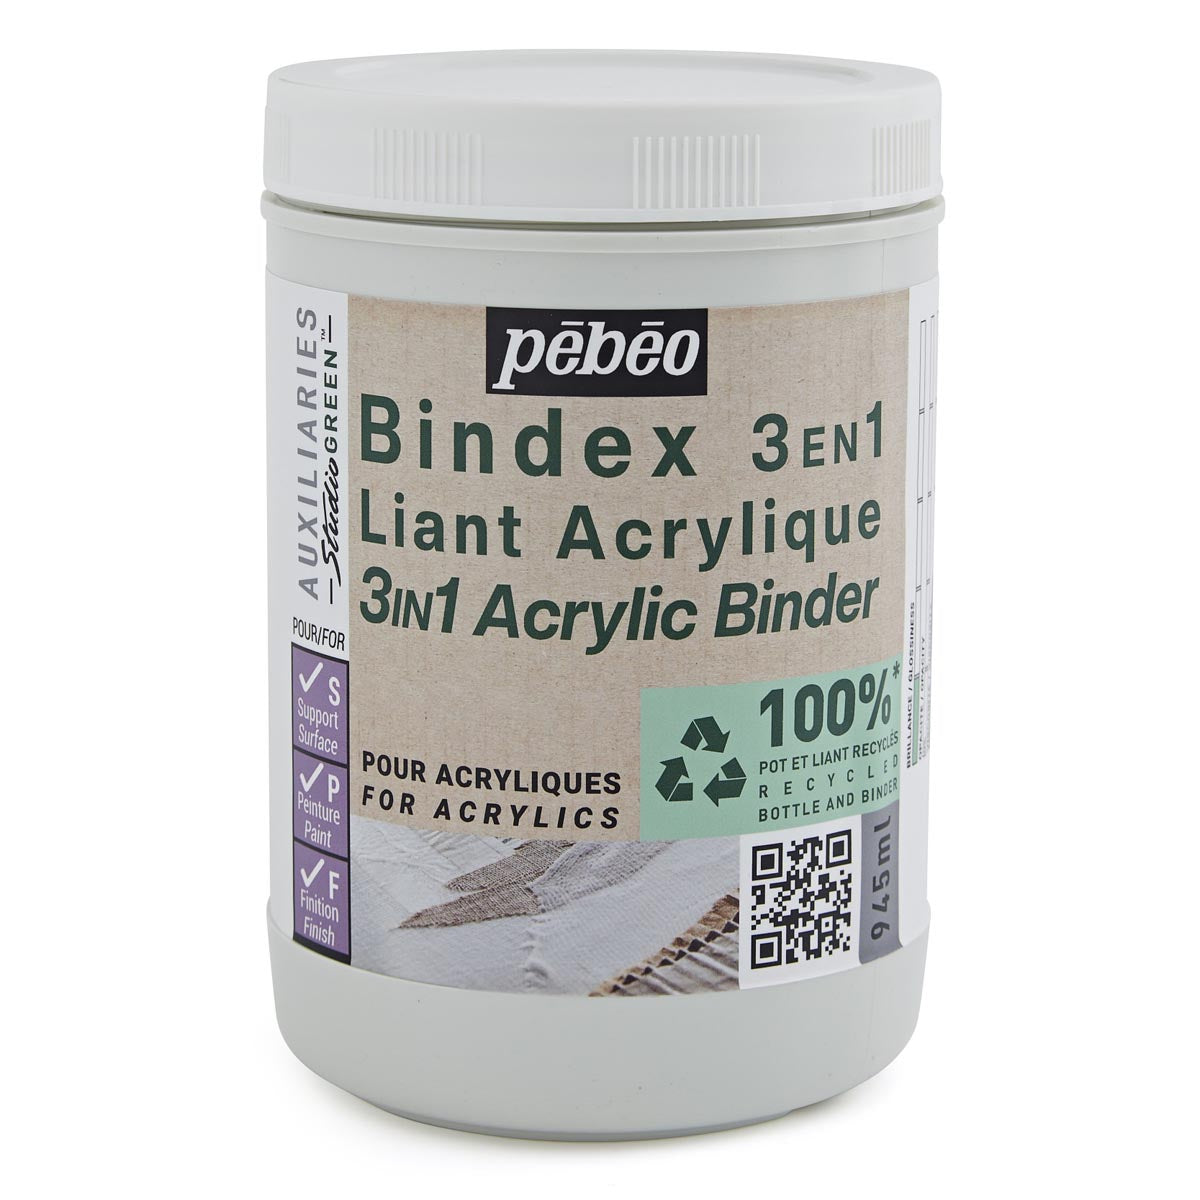 Pebeo - Bindex 3in1 Acrylic Binder Studio Green - 945ml